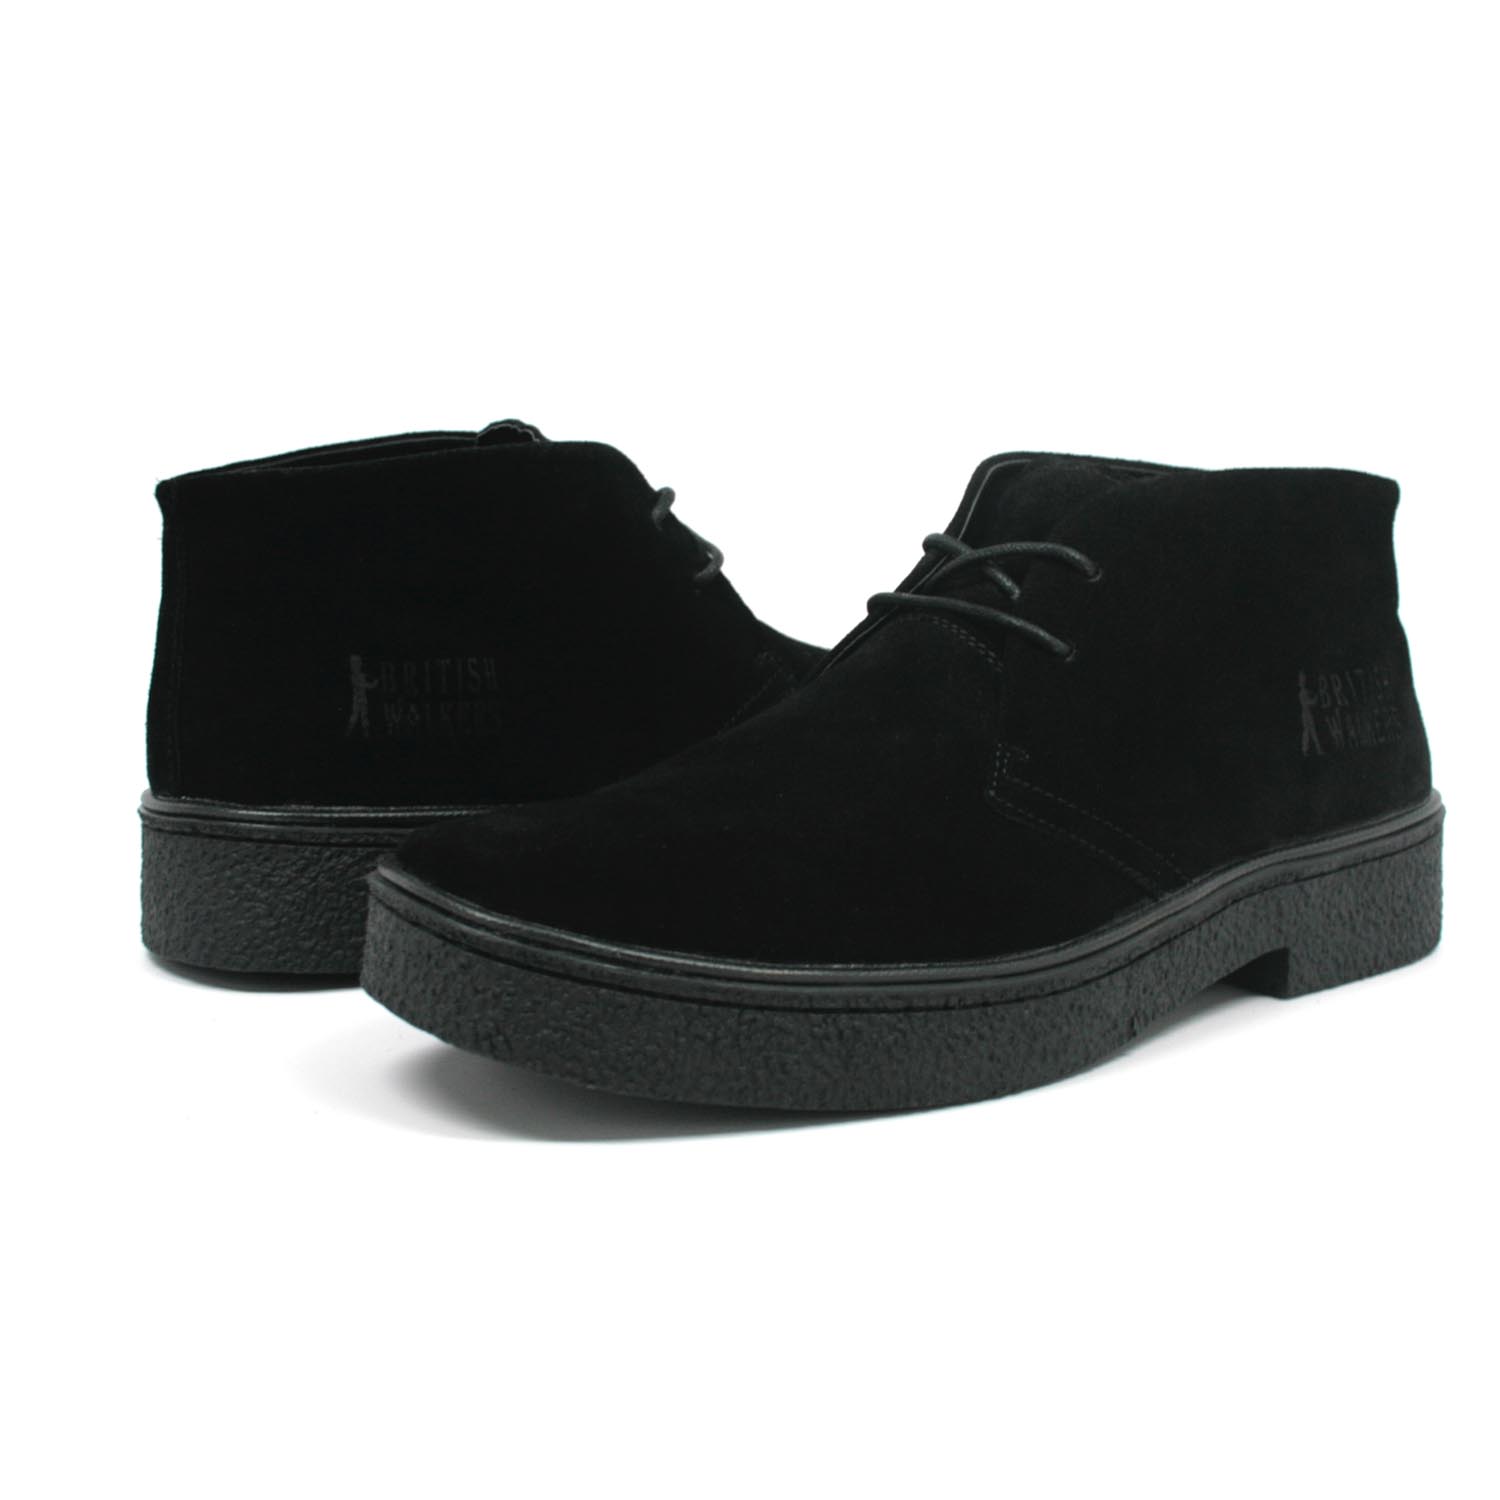 black chukka boots